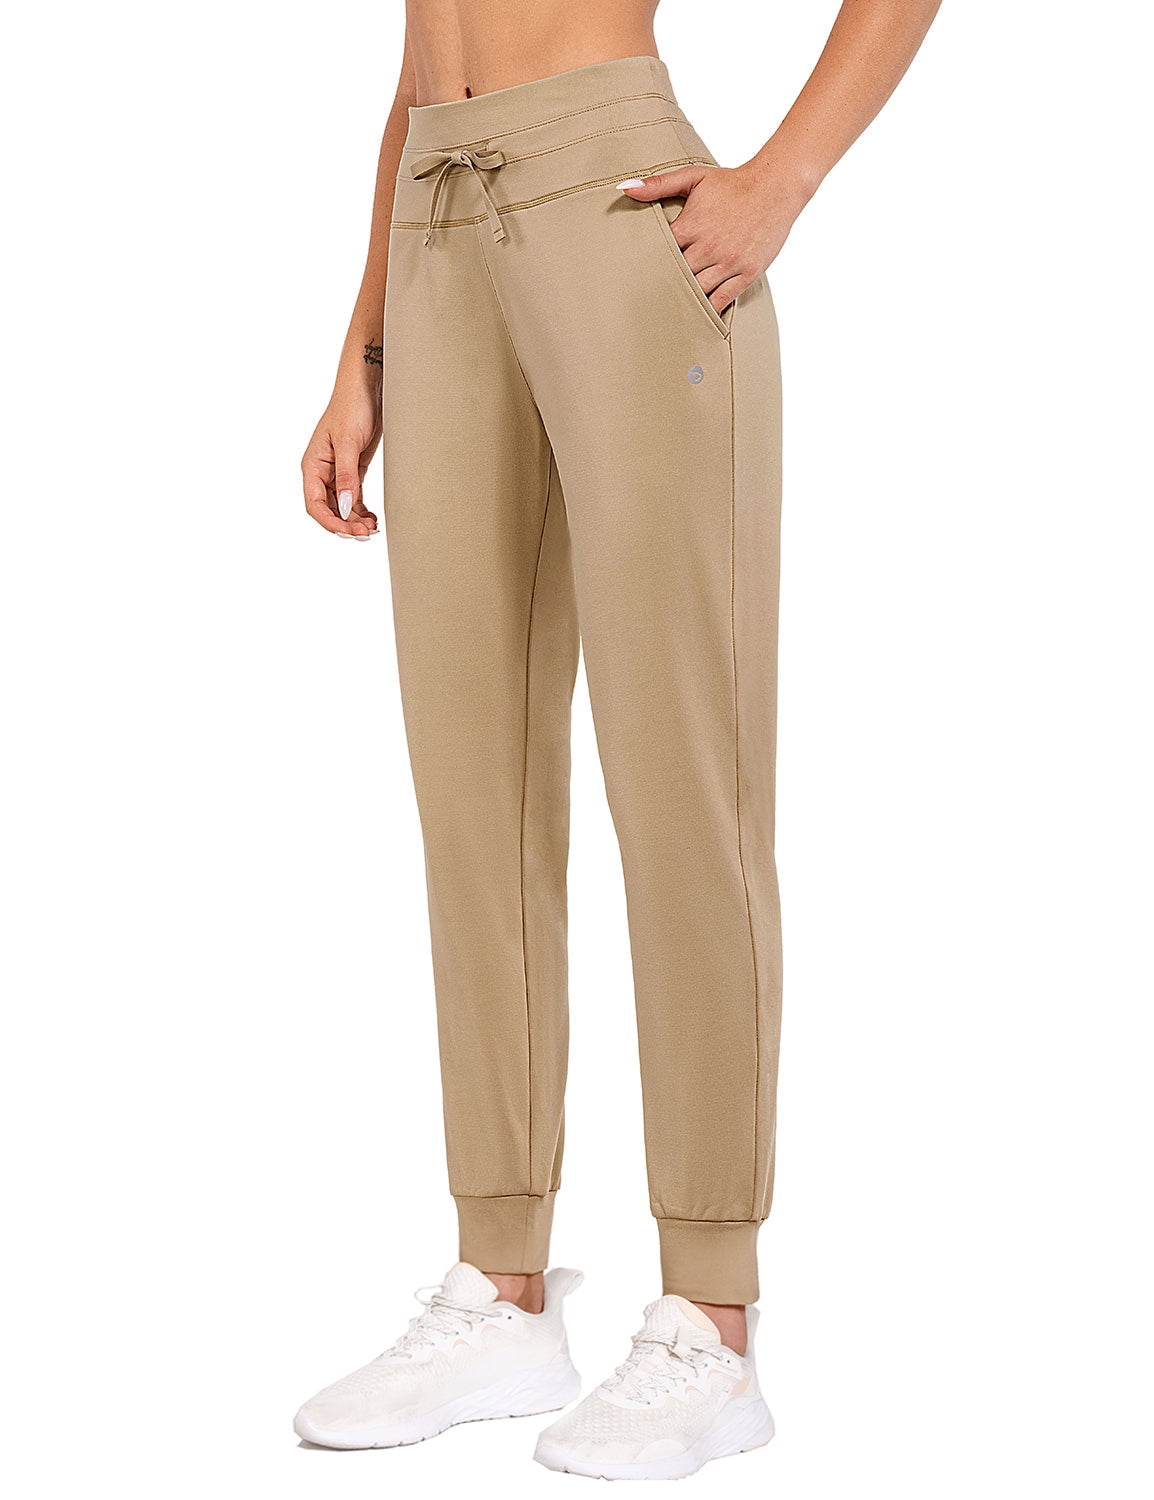 BALEAF Women's Fleece Lined Pants Water Resistant Sweatpants High